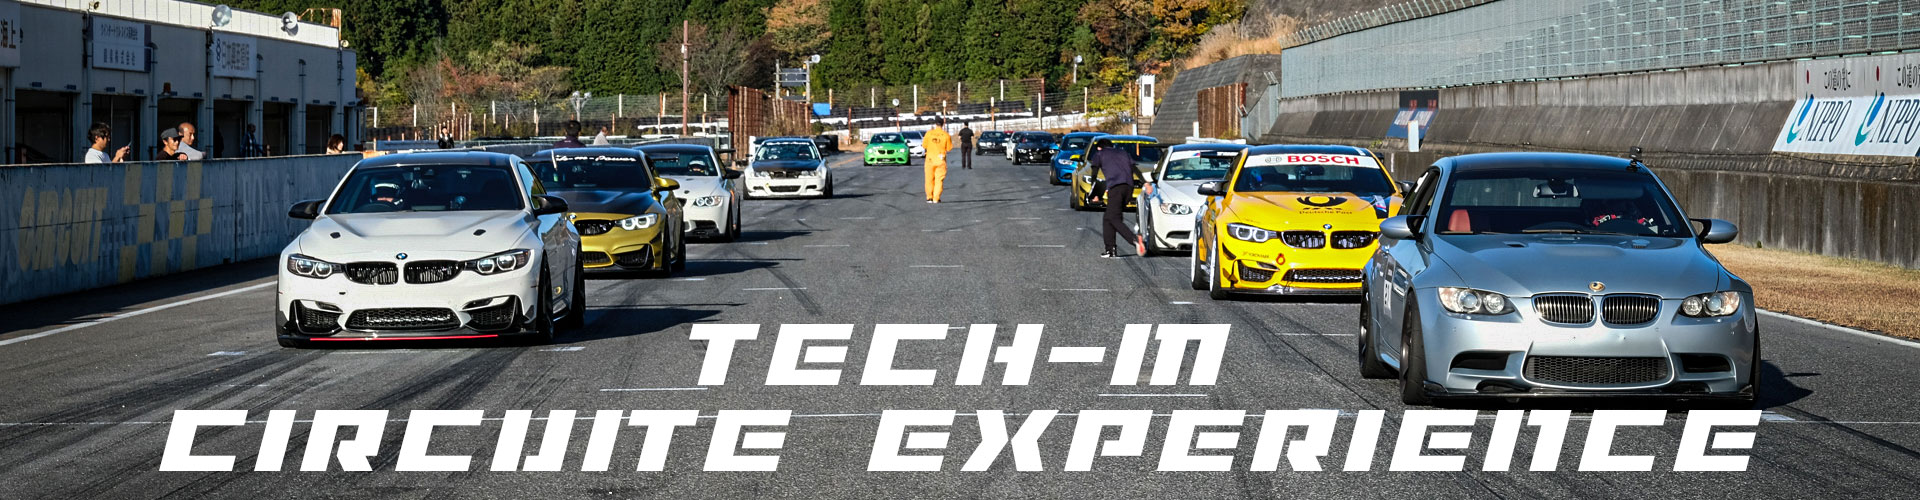 TECH-M主催の体験型サーキットイベント「CIRCUITE EXPERIENCE」